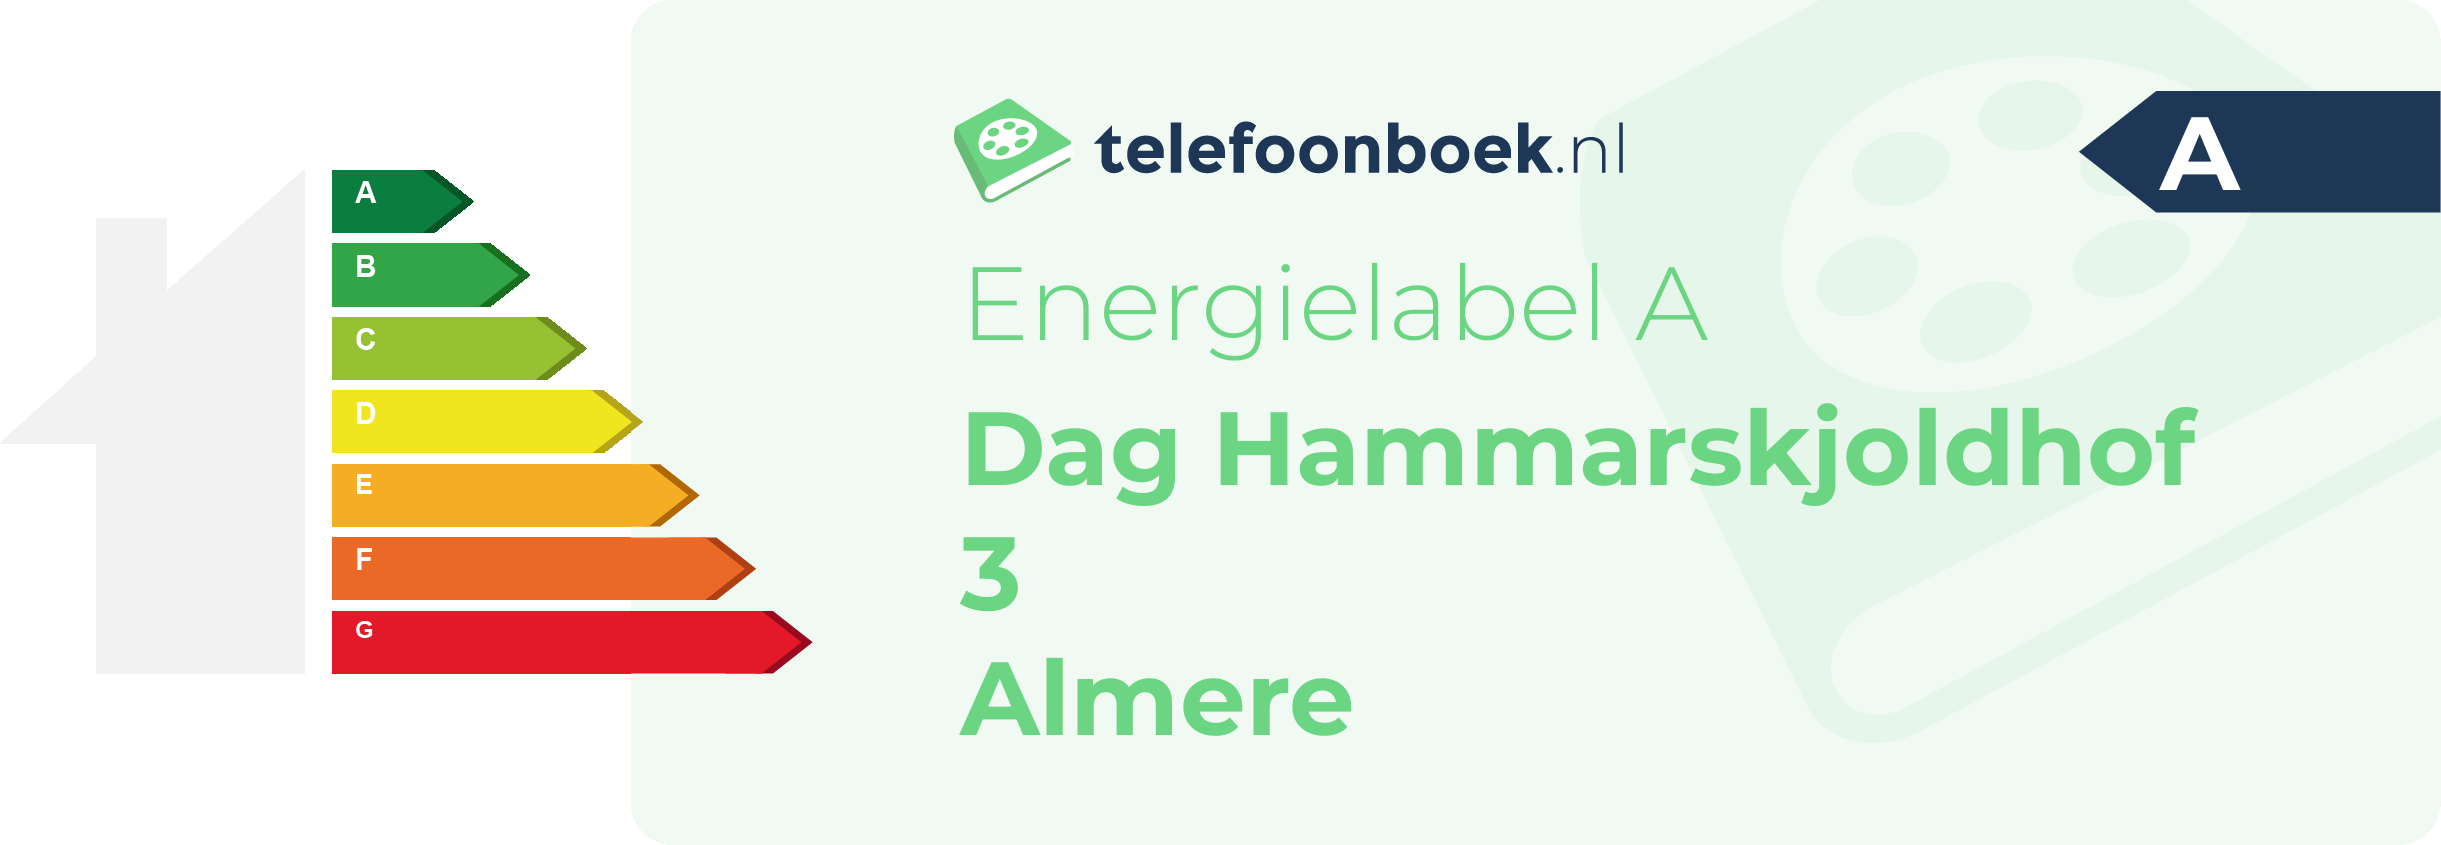 Energielabel Dag Hammarskjoldhof 3 Almere